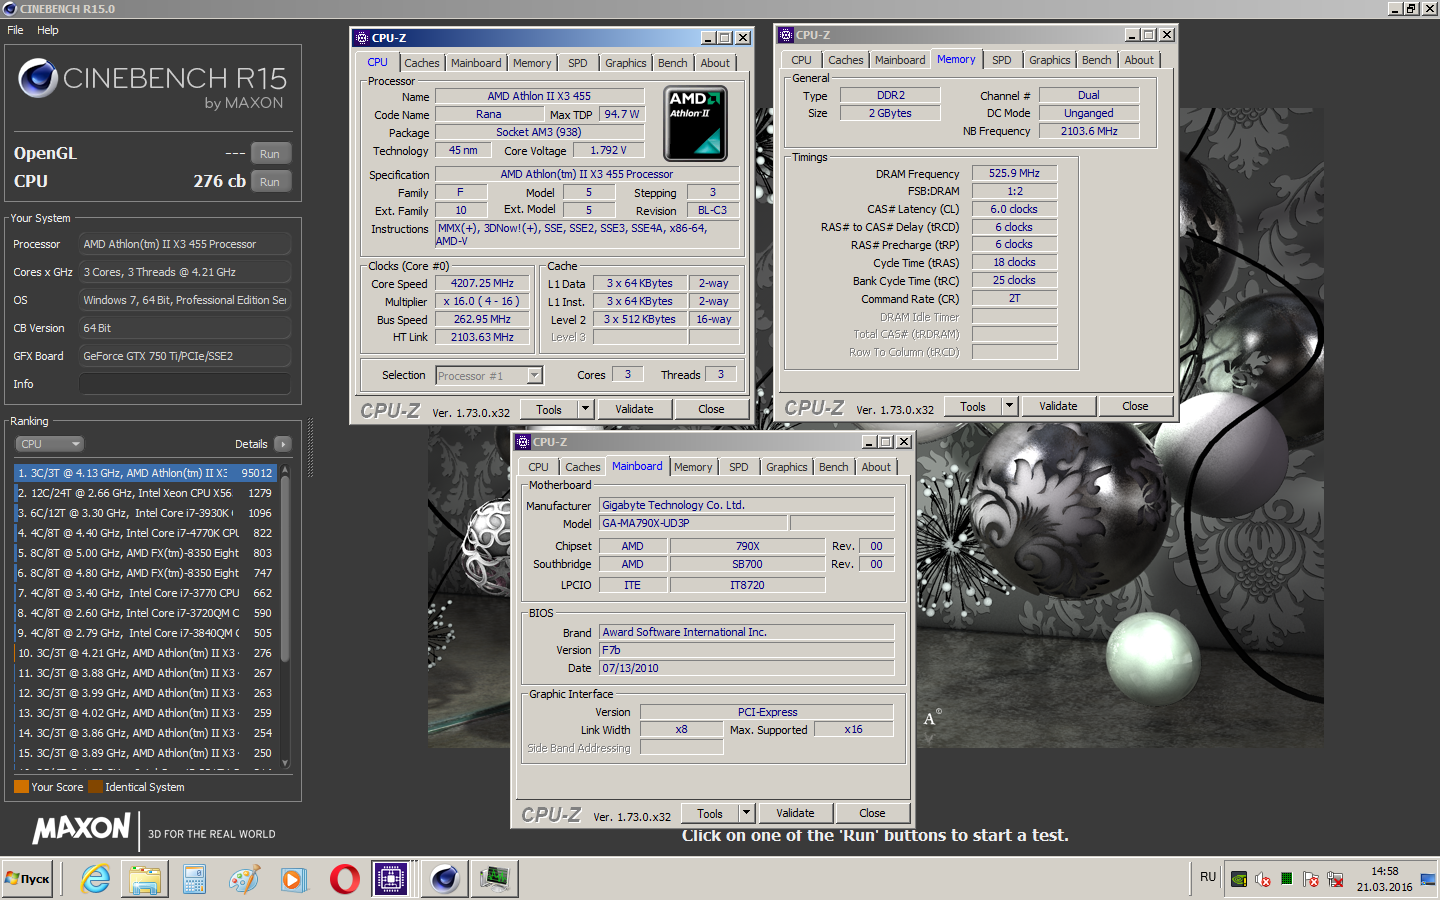 Spooky`s Cinebench - R15 score: 276 cb with a Athlon II X3 455